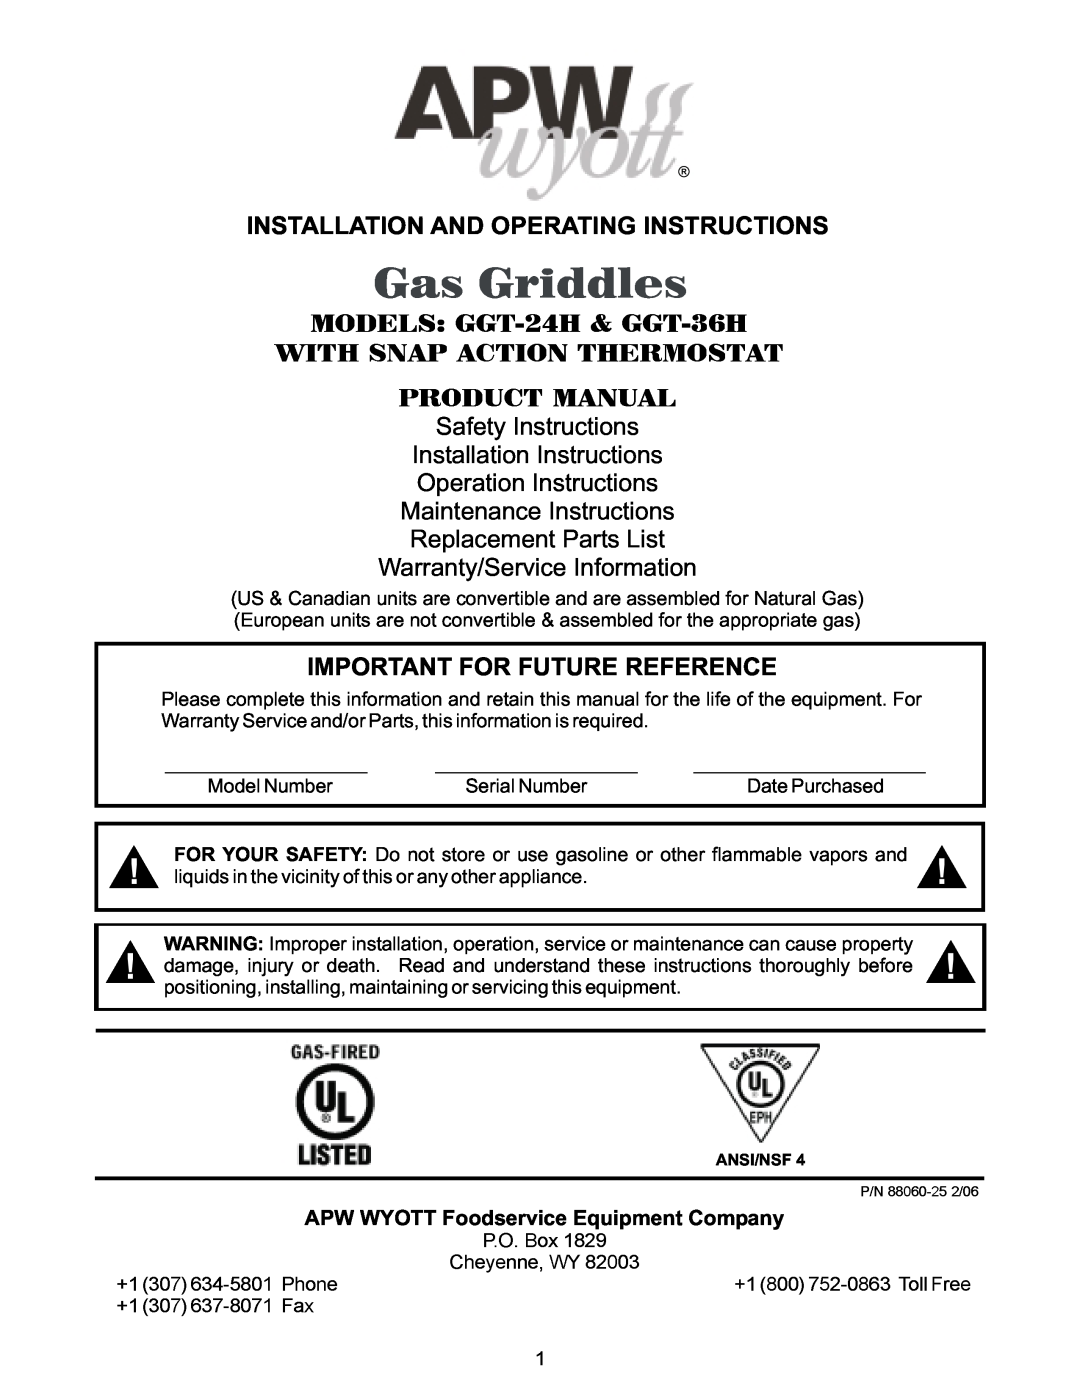 APW Wyott GGT-24H warranty Safety Instructions Installation Instructions, Operation Instructions Maintenance Instructions 